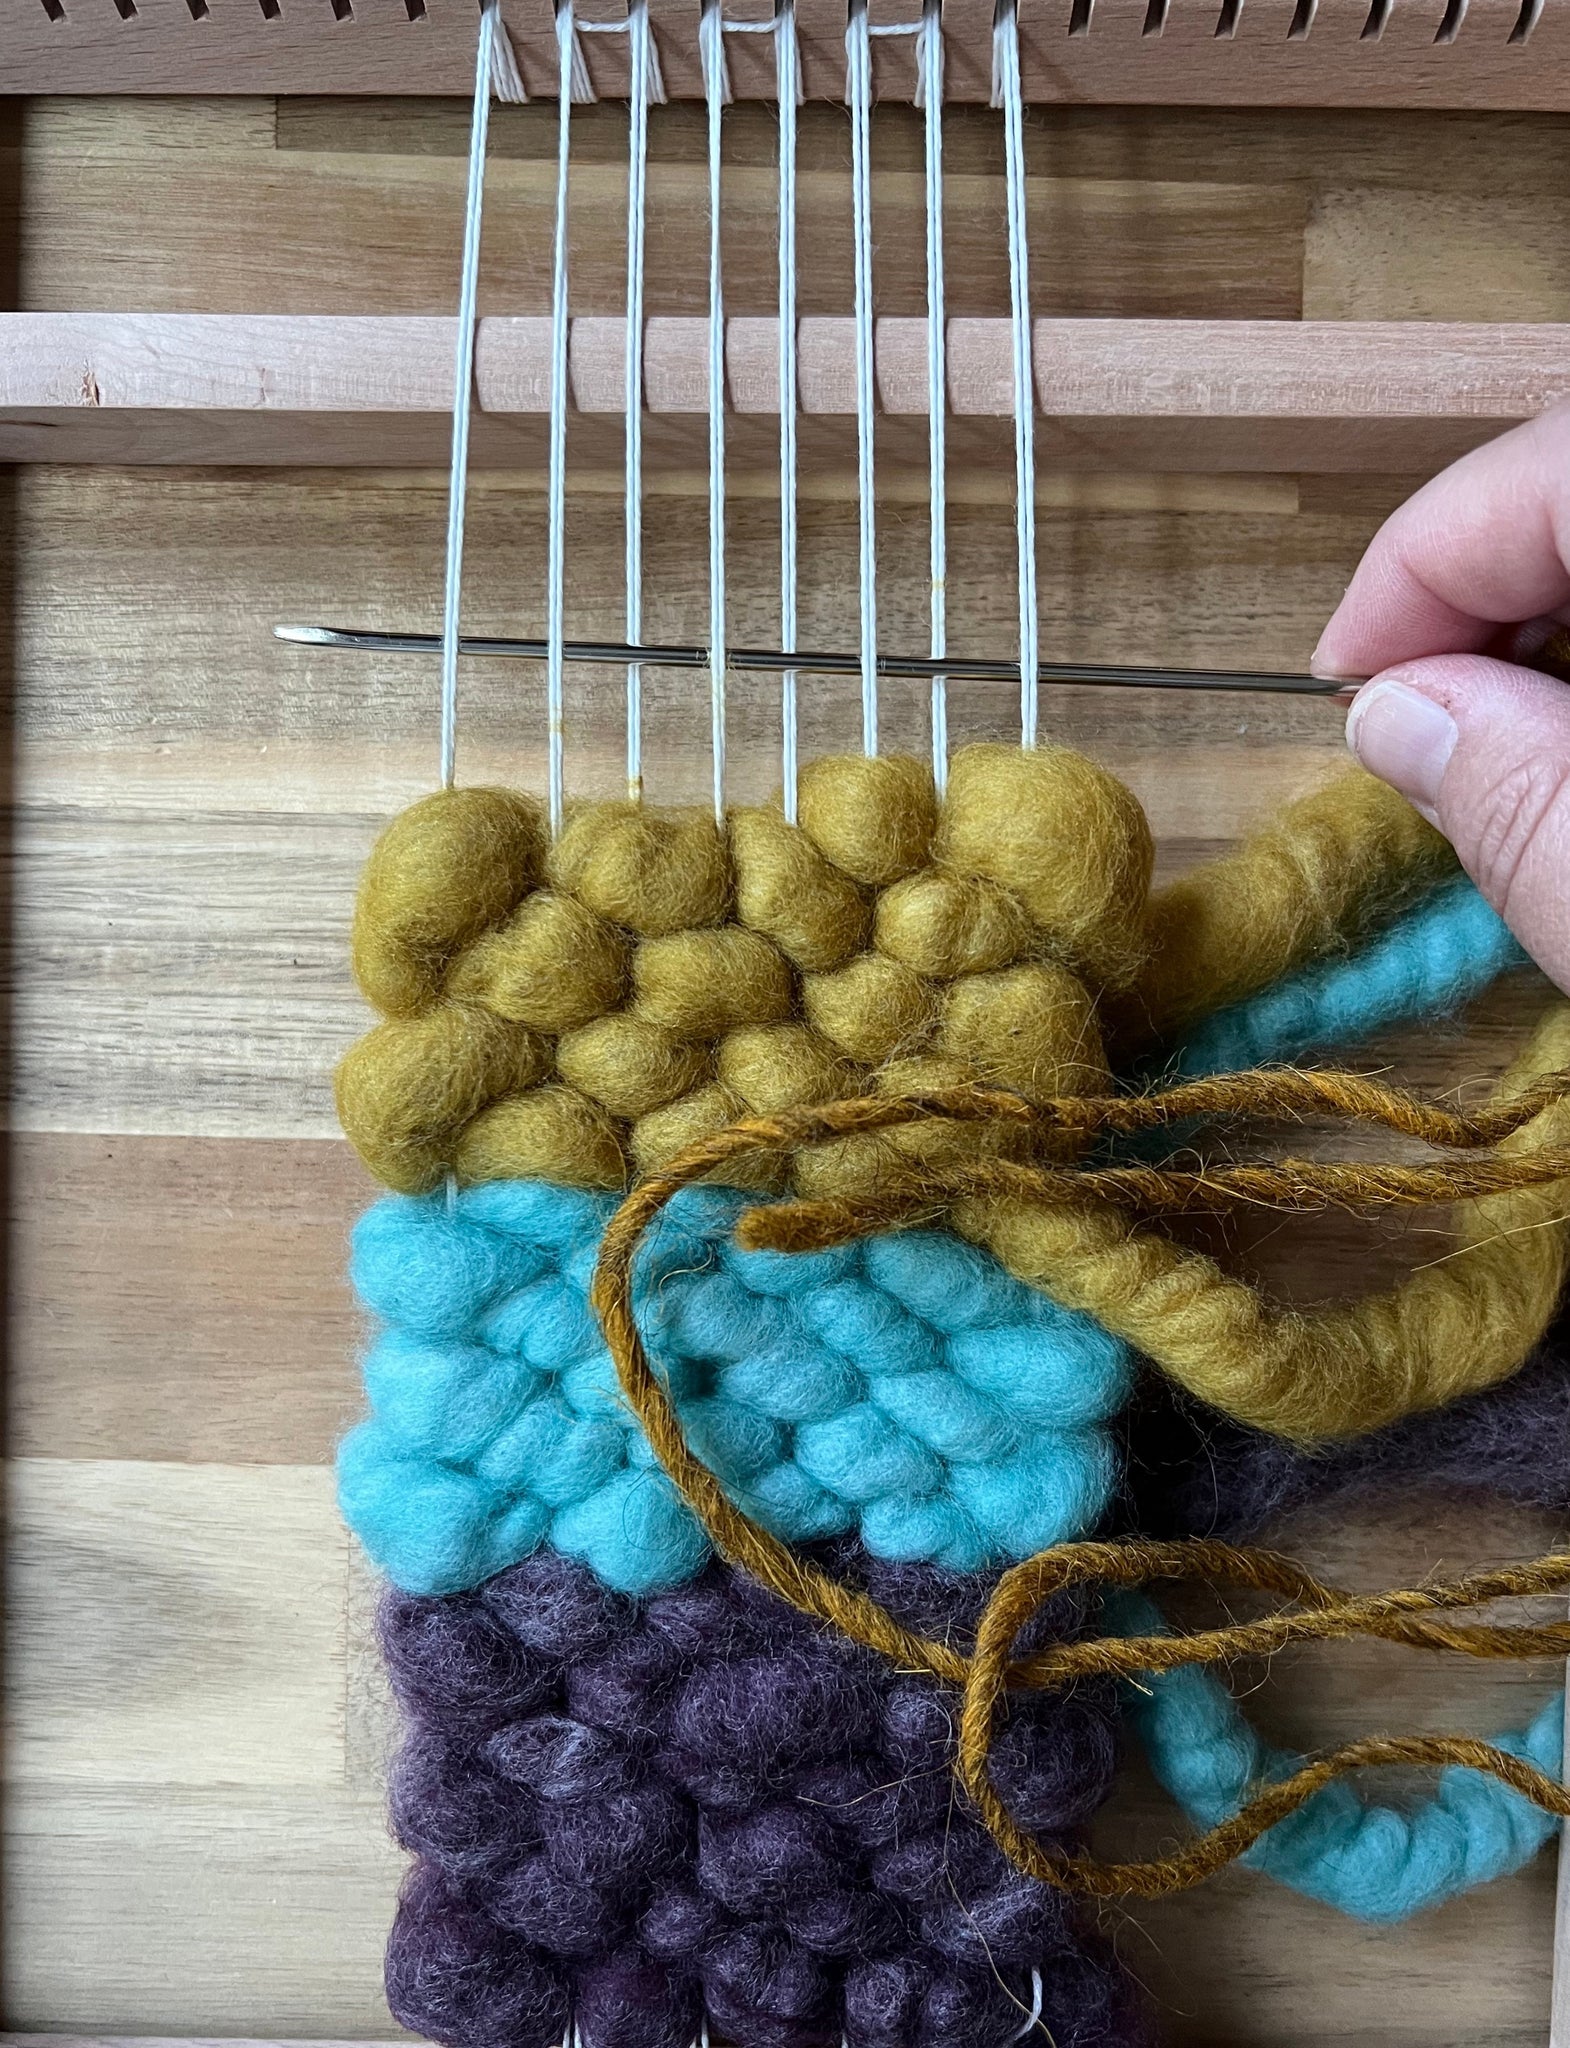  Weaving Needles Kit - Tapestry Needles - Nalbinding Wooden  Needle 5-Pack - Weaving Supplies – Frame Loom Weaving – Tapestry Weaving -  Weaving Tools - Be Creative Craft Supplies Store